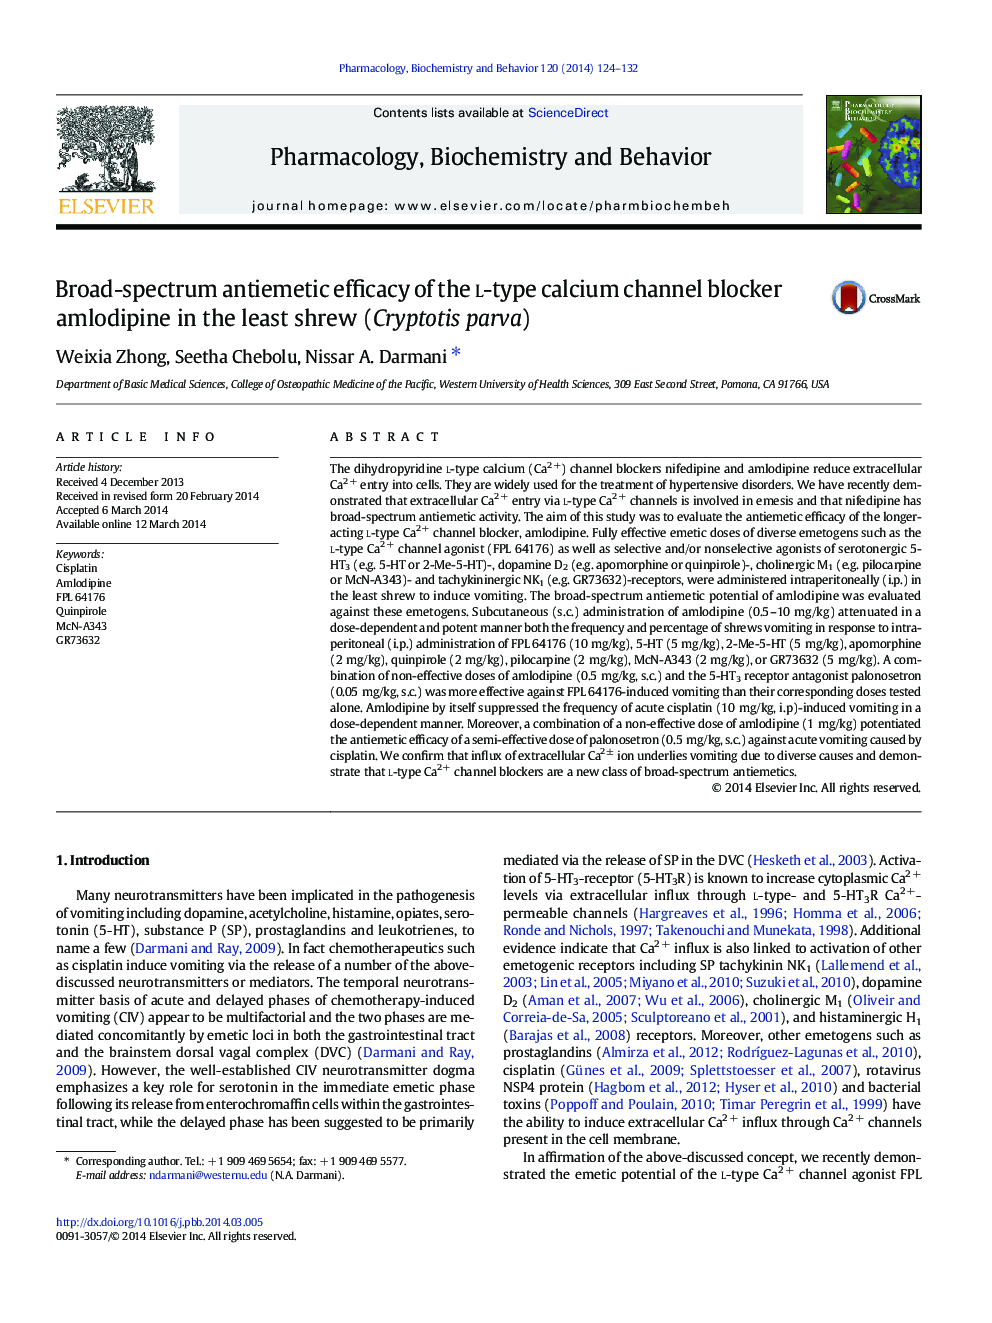 Broad-spectrum antiemetic efficacy of the l-type calcium channel blocker amlodipine in the least shrew (Cryptotis parva)